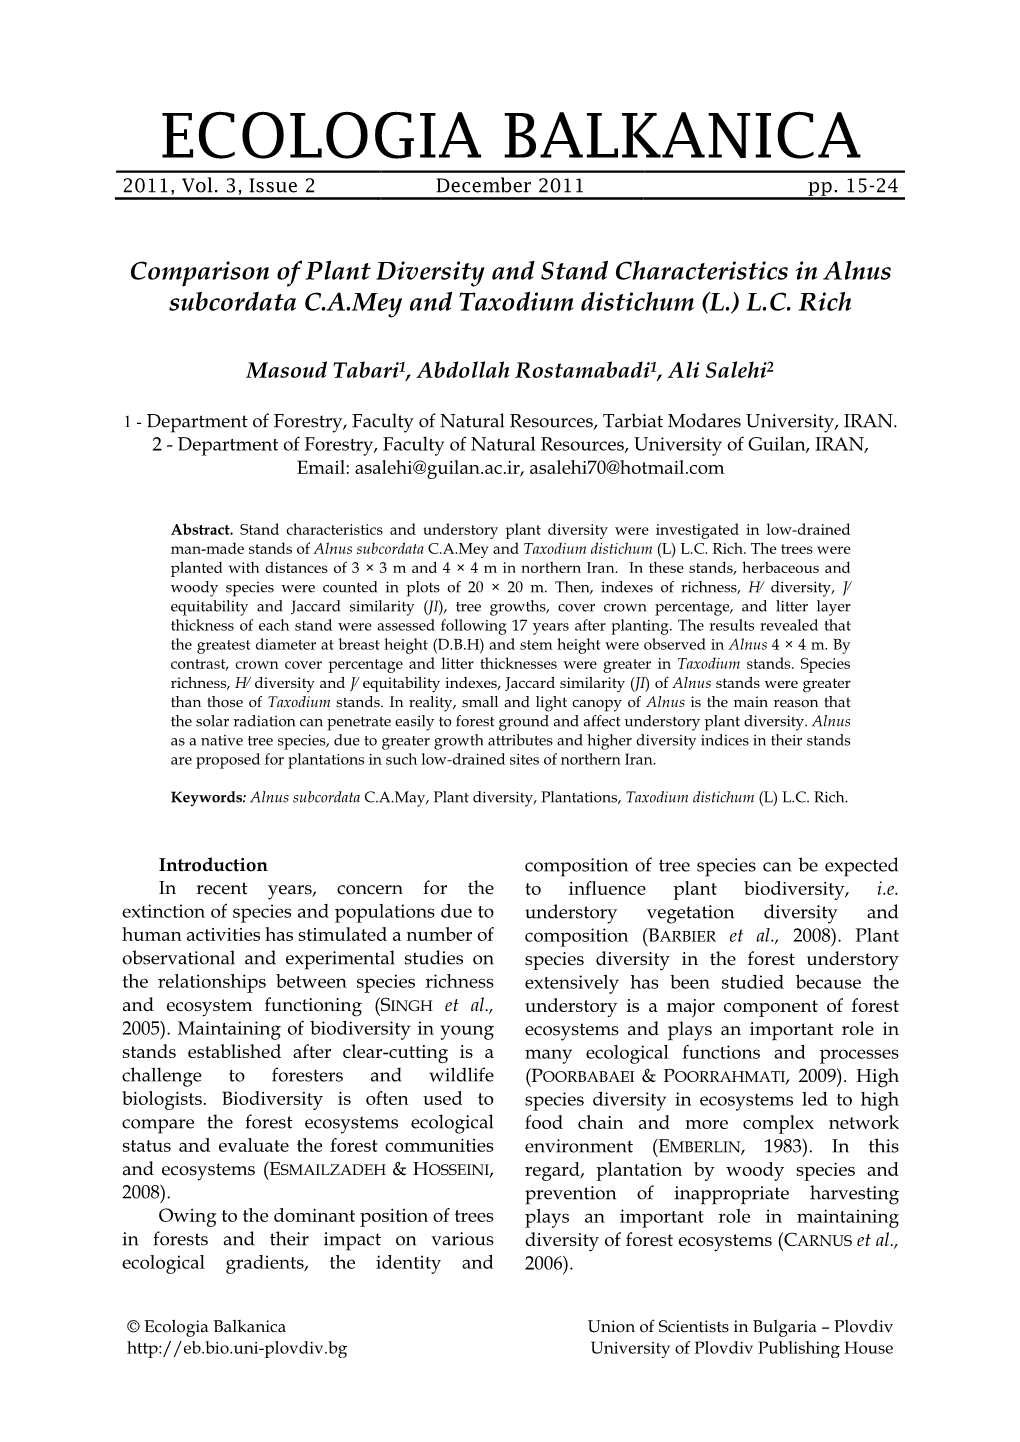 Comparison of Plant Diversity and Stand Characteristics in Alnus Subcordata C.A.Mey and Taxodium Distichum (L.) L.C